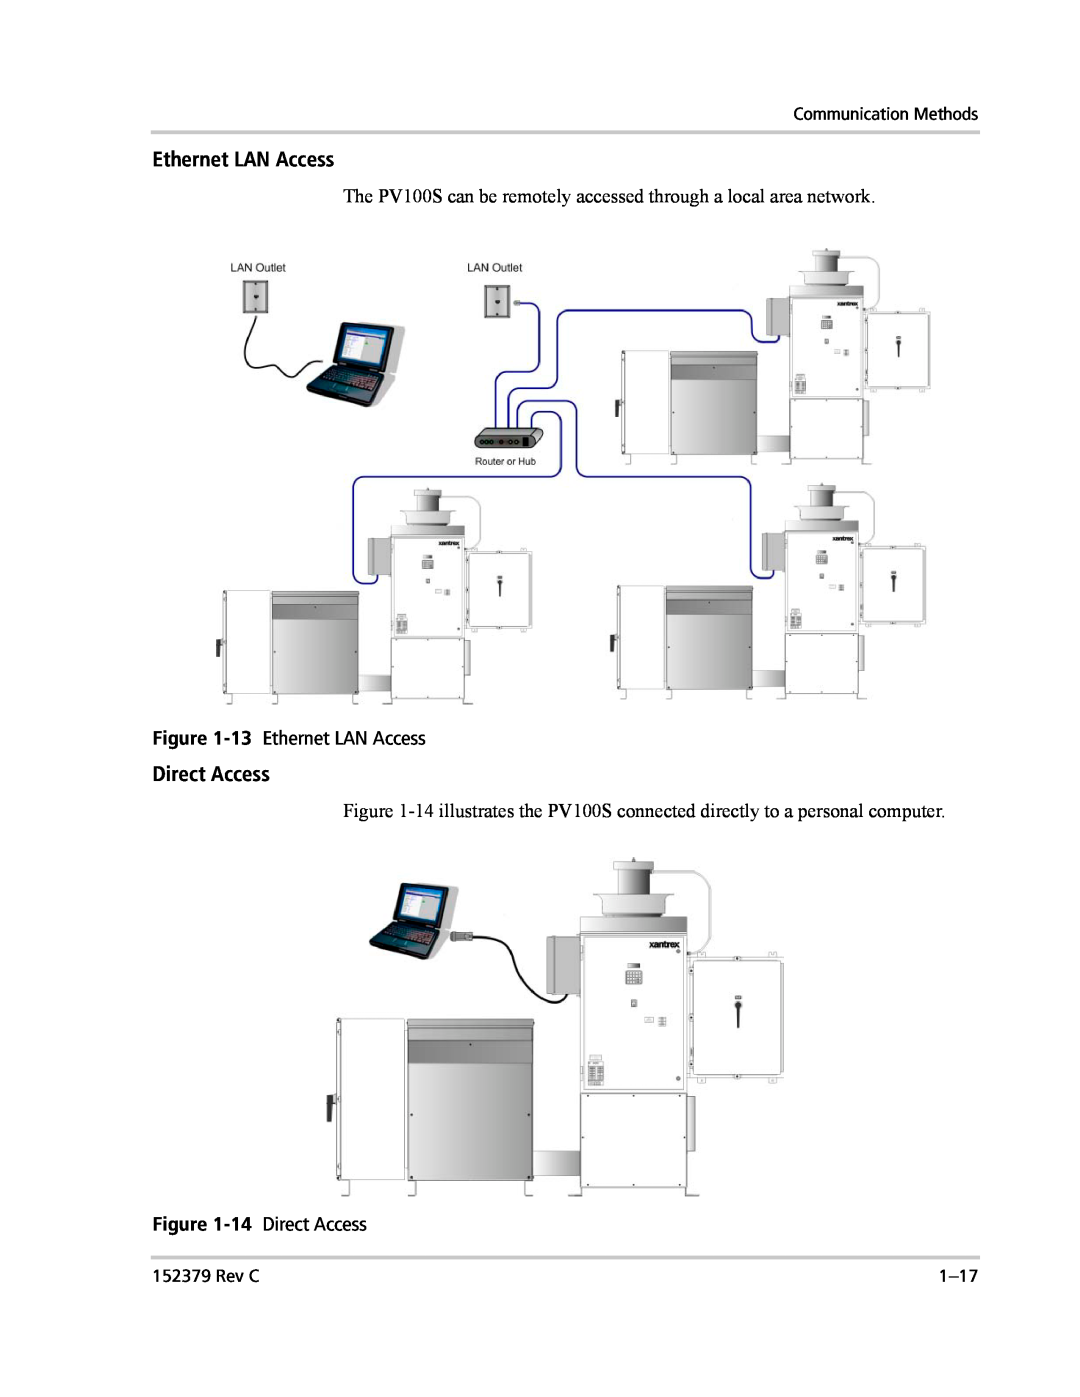 Xantrex Technology PV100S-208 manual 13 Ethernet LAN Access, 14 Direct Access, Communication Methods, Rev C, 1-17 